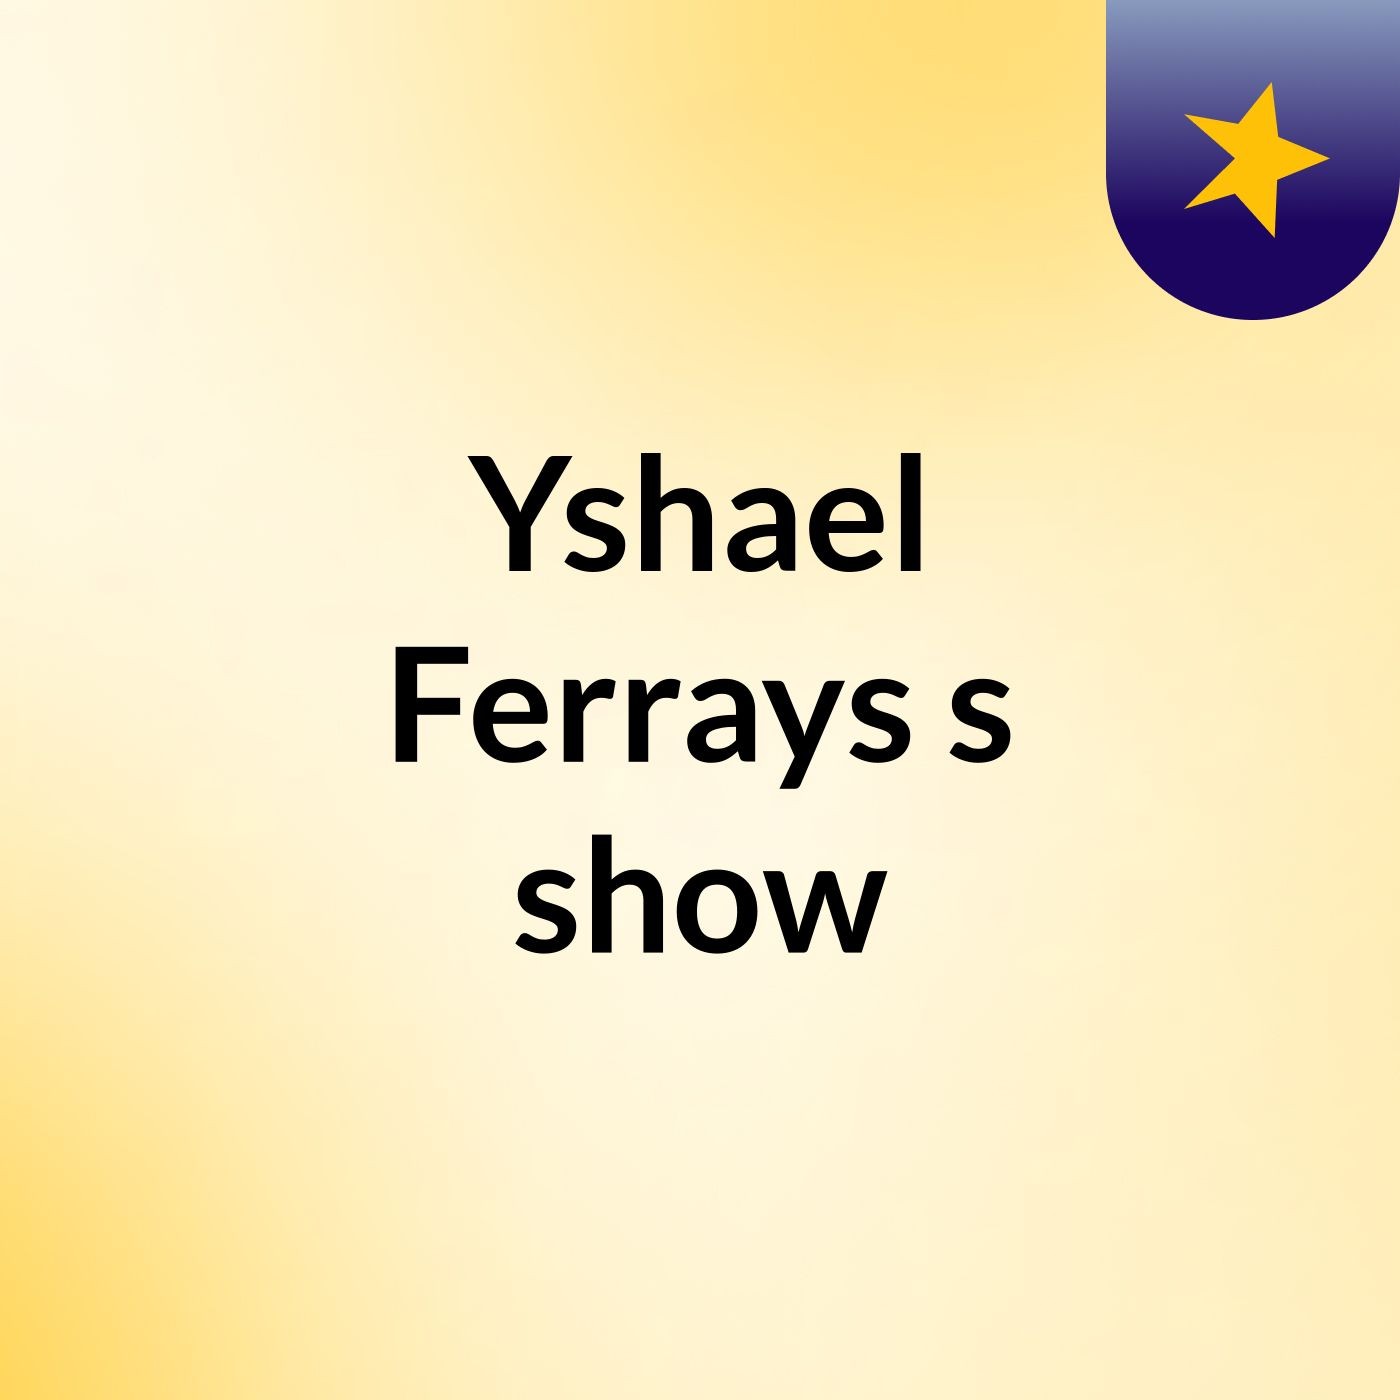 Yshael Ferrays's show